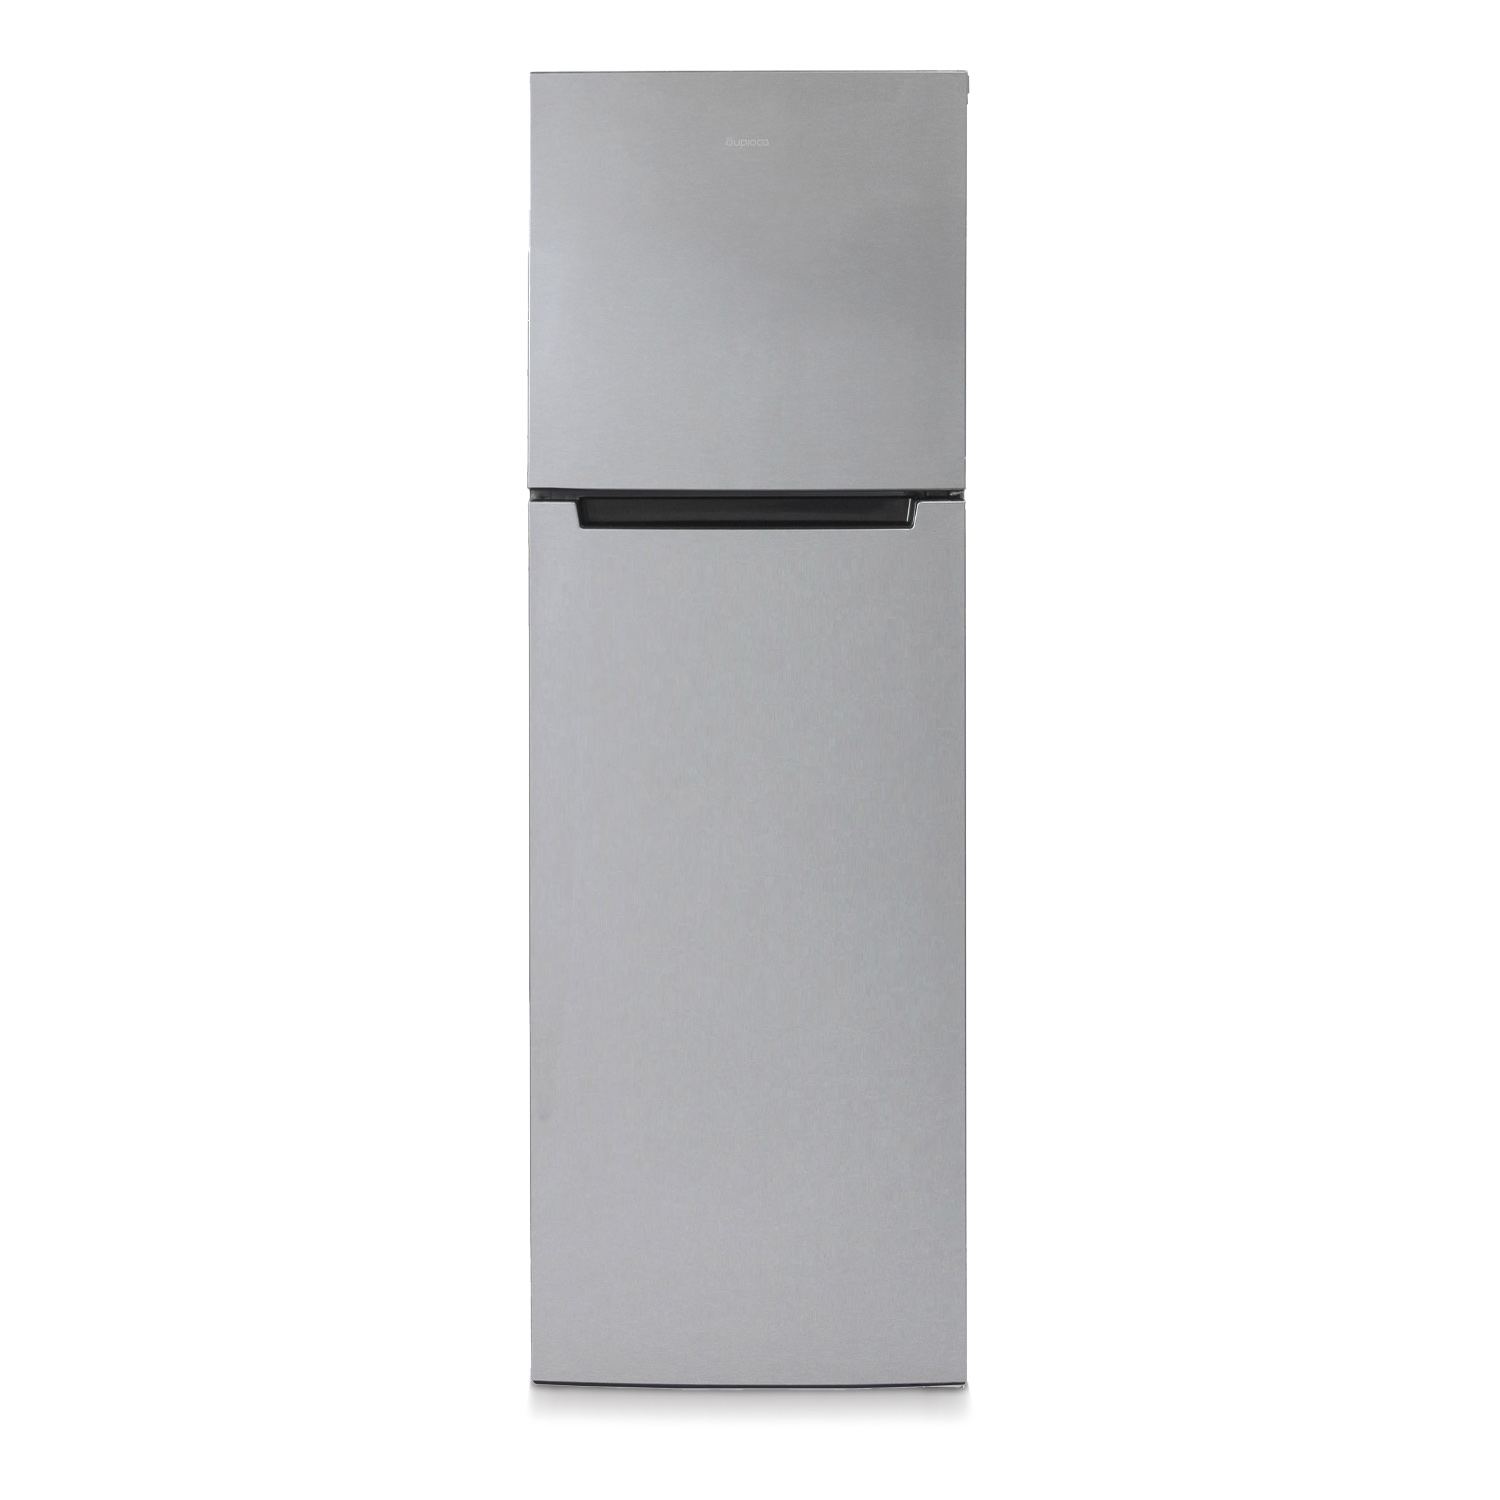 Холодильник Бирюса C6039 серебристый холодильник бирюса m8 серебристый